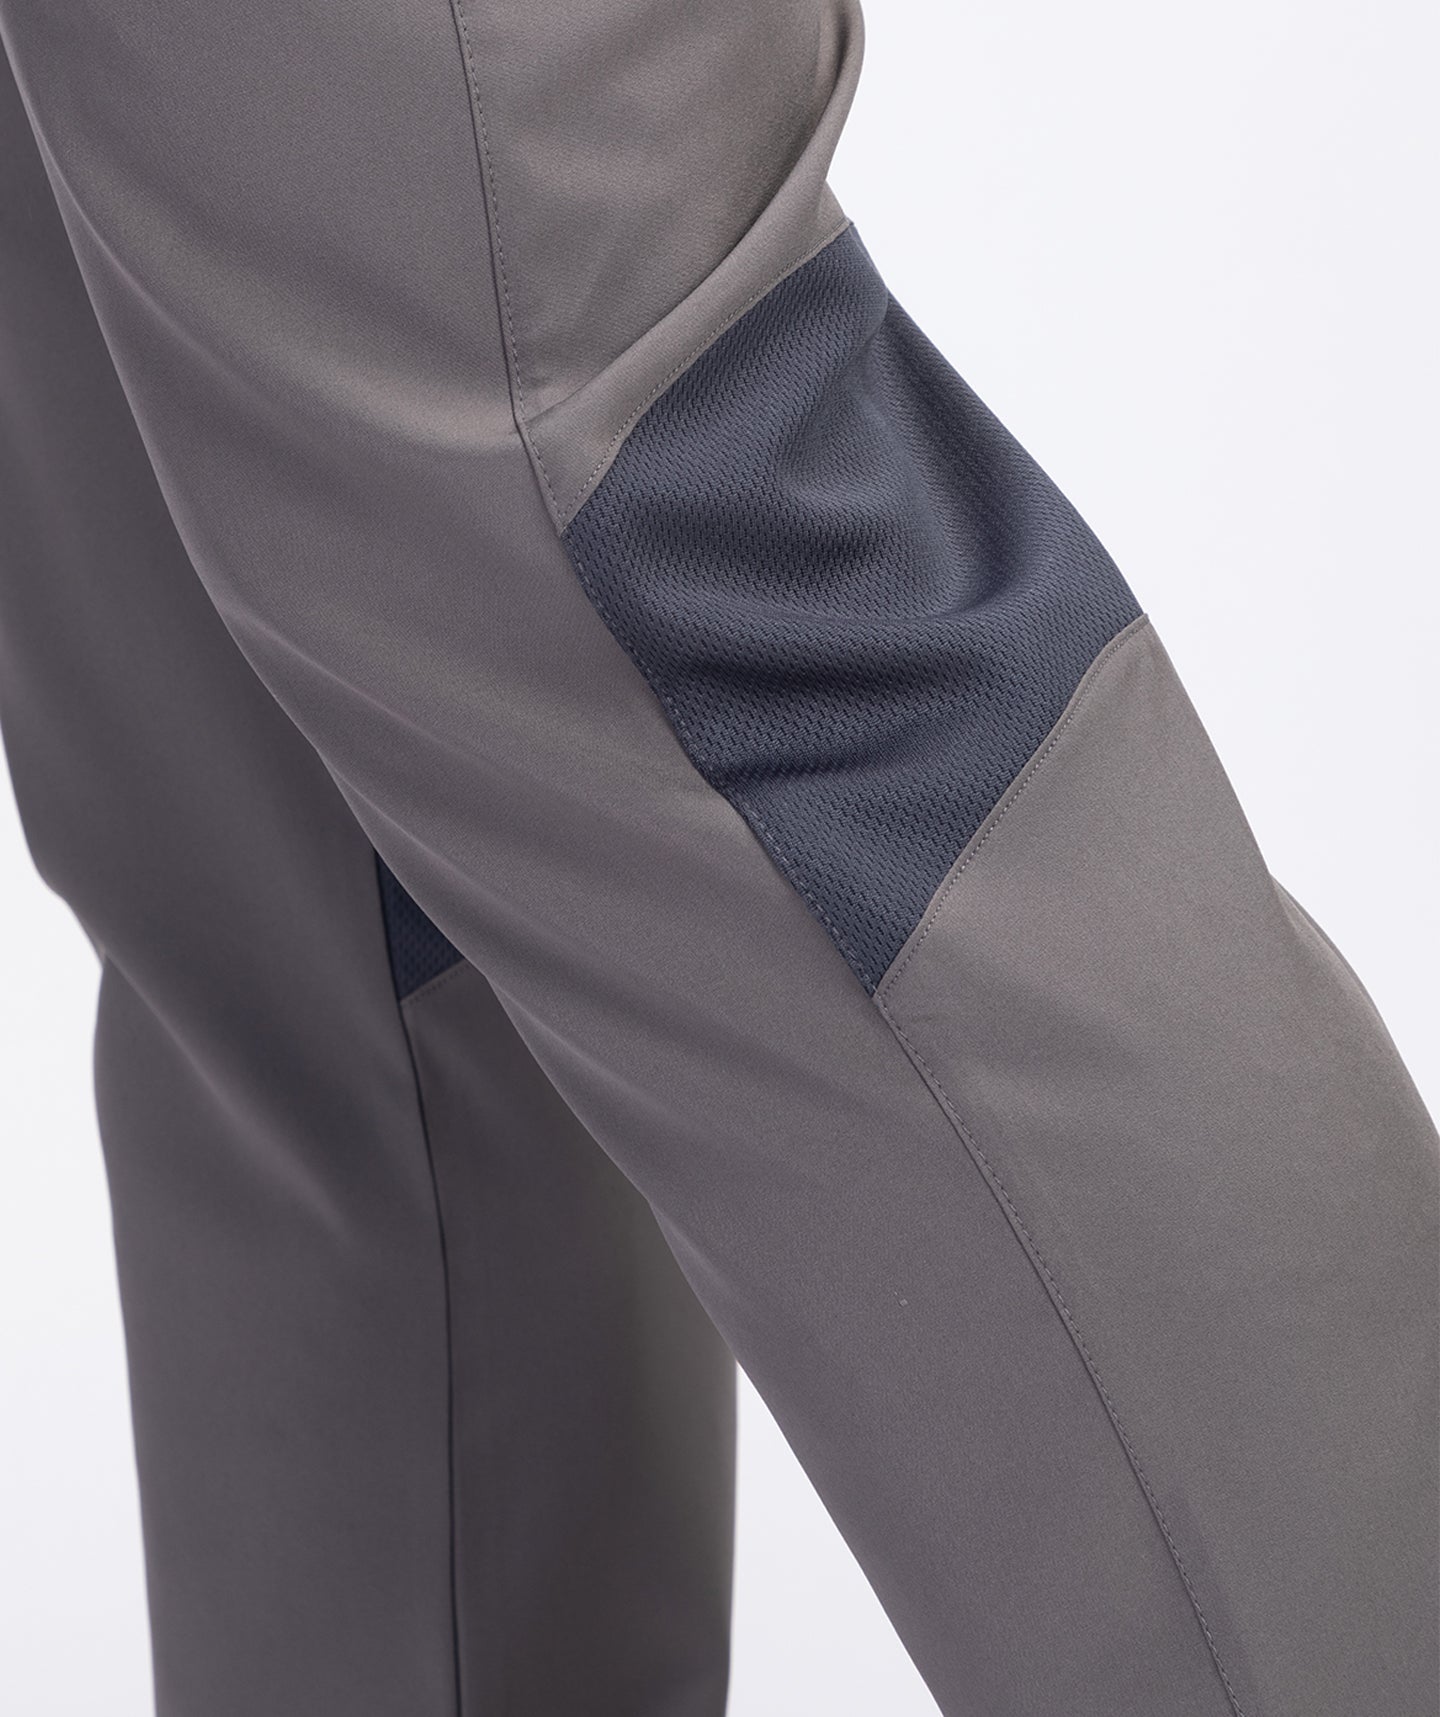 Meter ⚜  
11406-04 ⚜  
A4 ⚜  
PANTONE: Grey ⚜  
plain weave, 90 % polyester 10 % spandex, 1/1,100-110gsm P:Grey